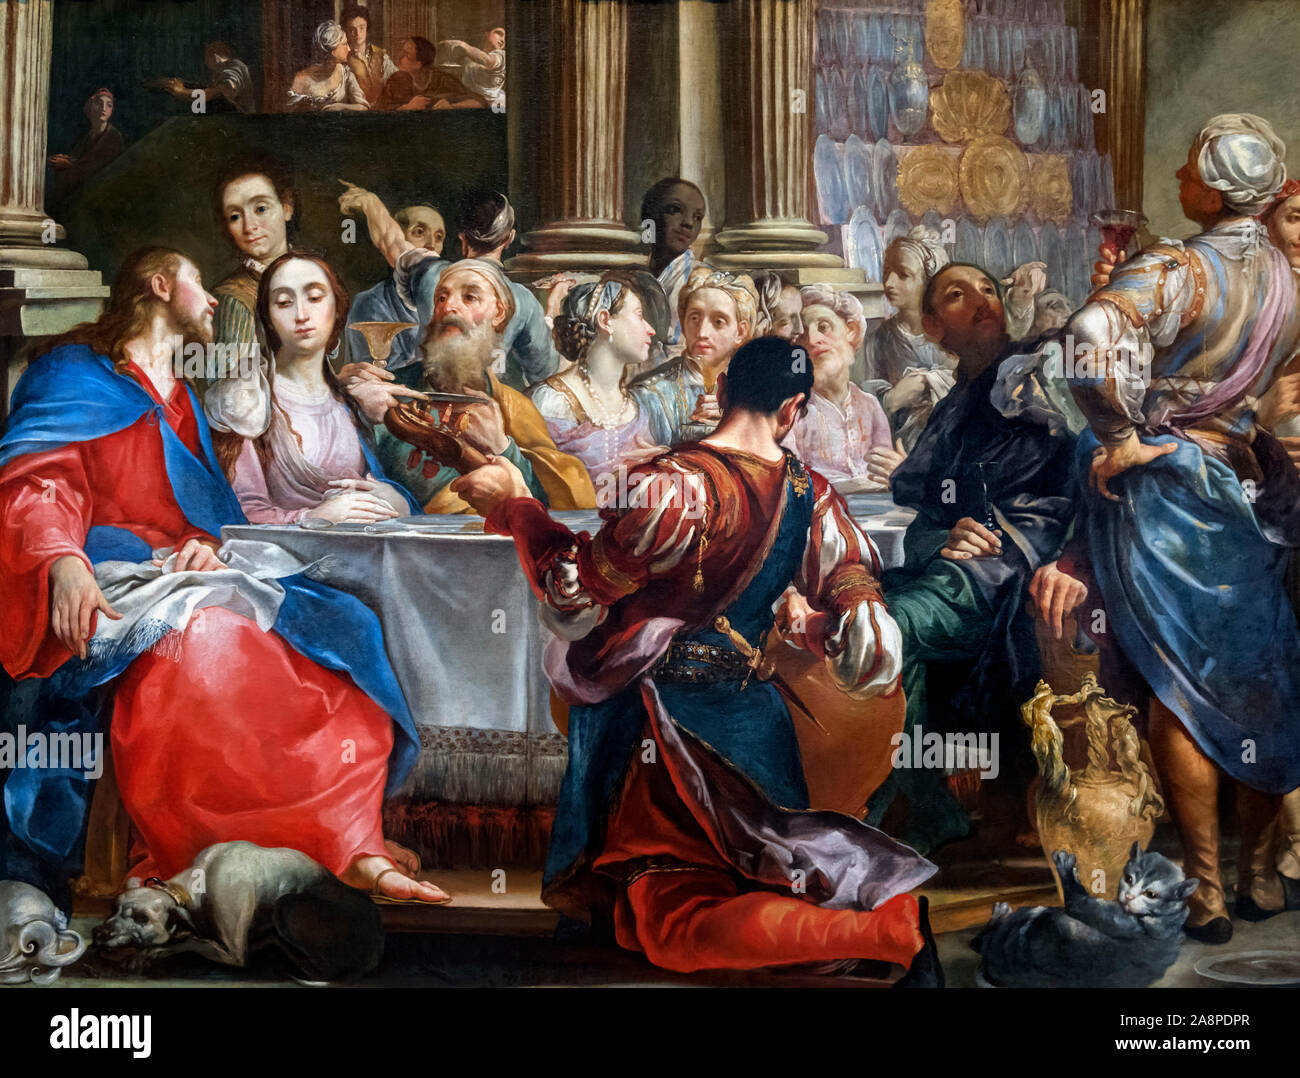 Wedding at Cana by Giuseppe Maria Crespi (1665-1747), oil on canvas, c.1686 Stock Photo